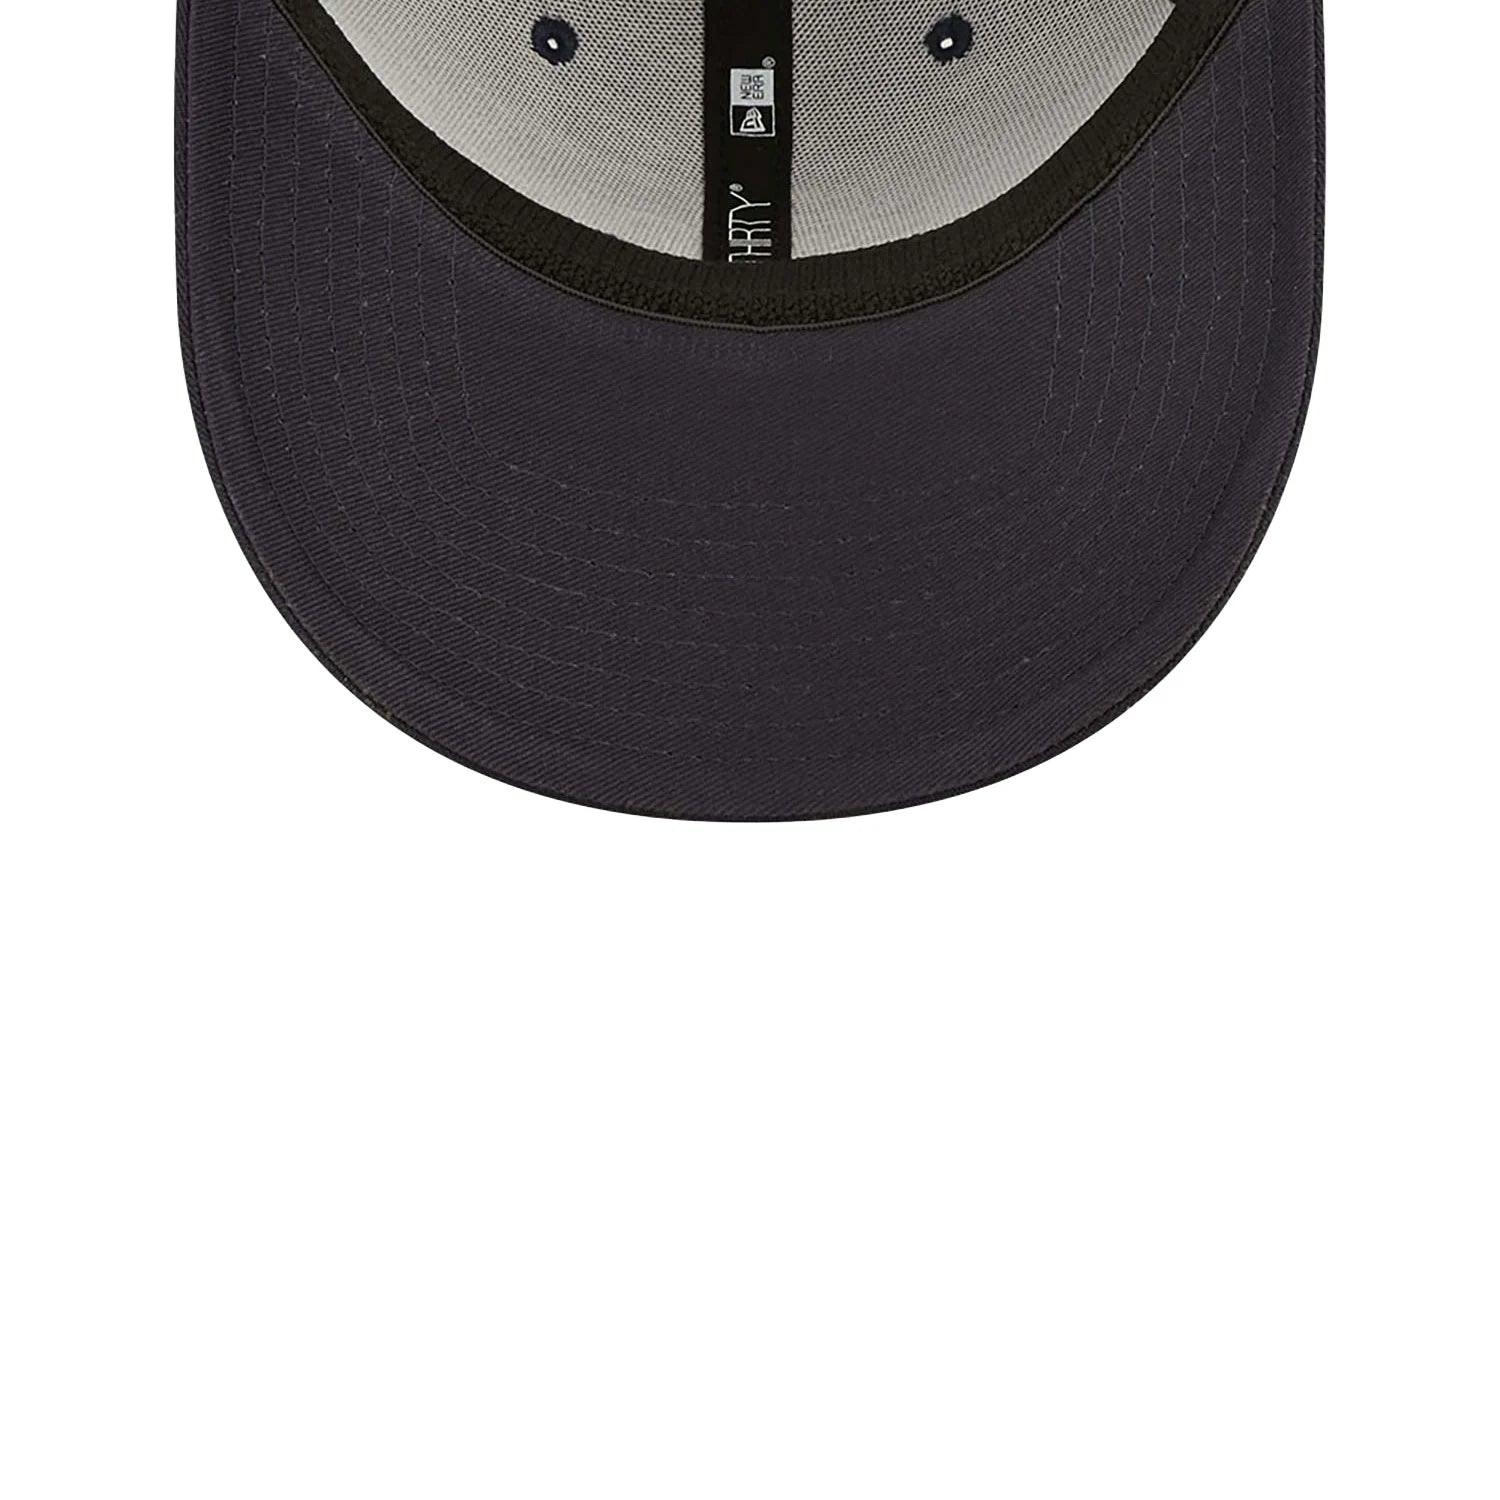 Boston Red Sox Team Logo Infill 9FORTY Navy Adjustable - New Era cap